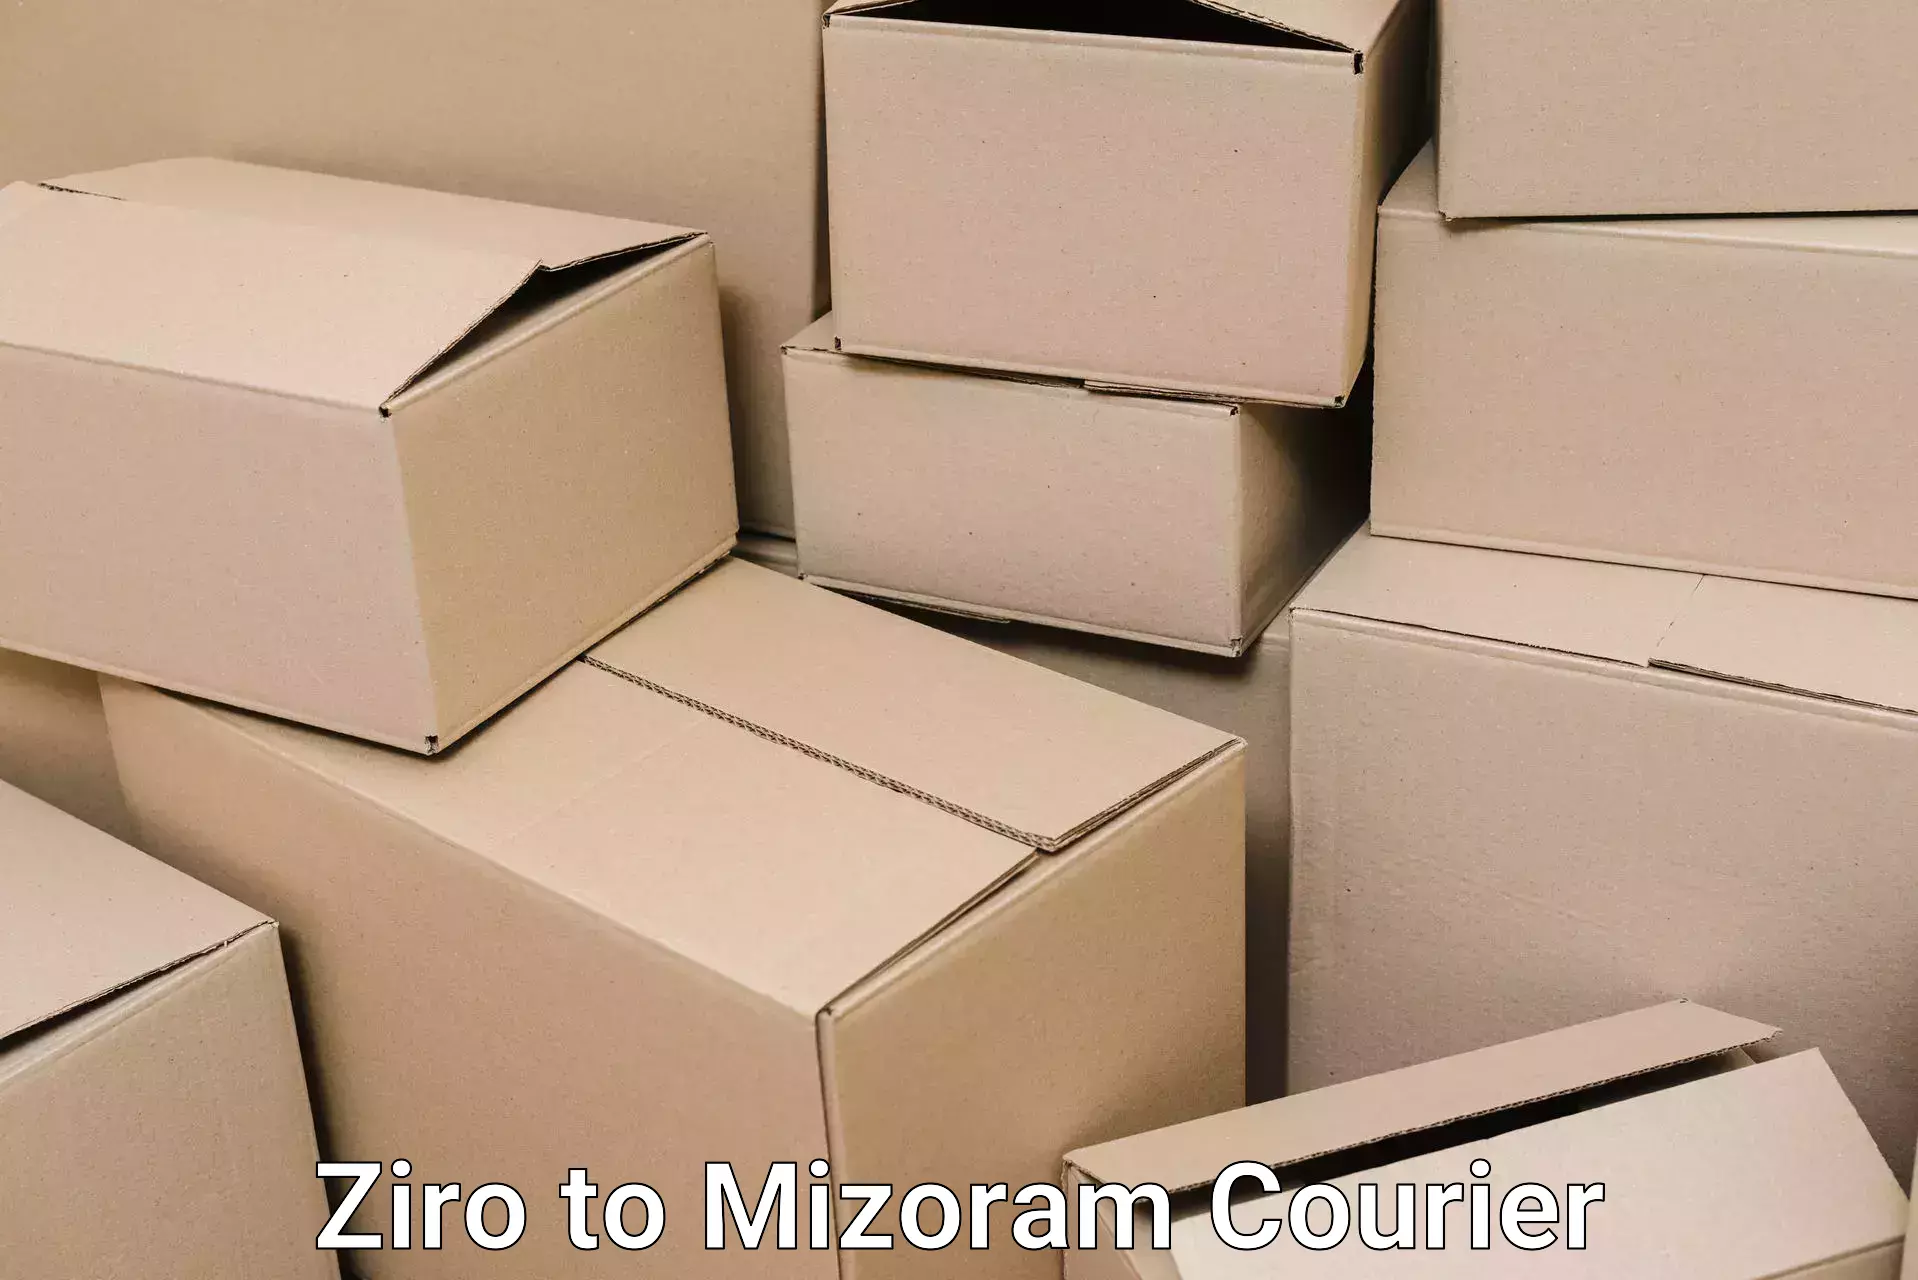 Trusted moving company Ziro to Mizoram